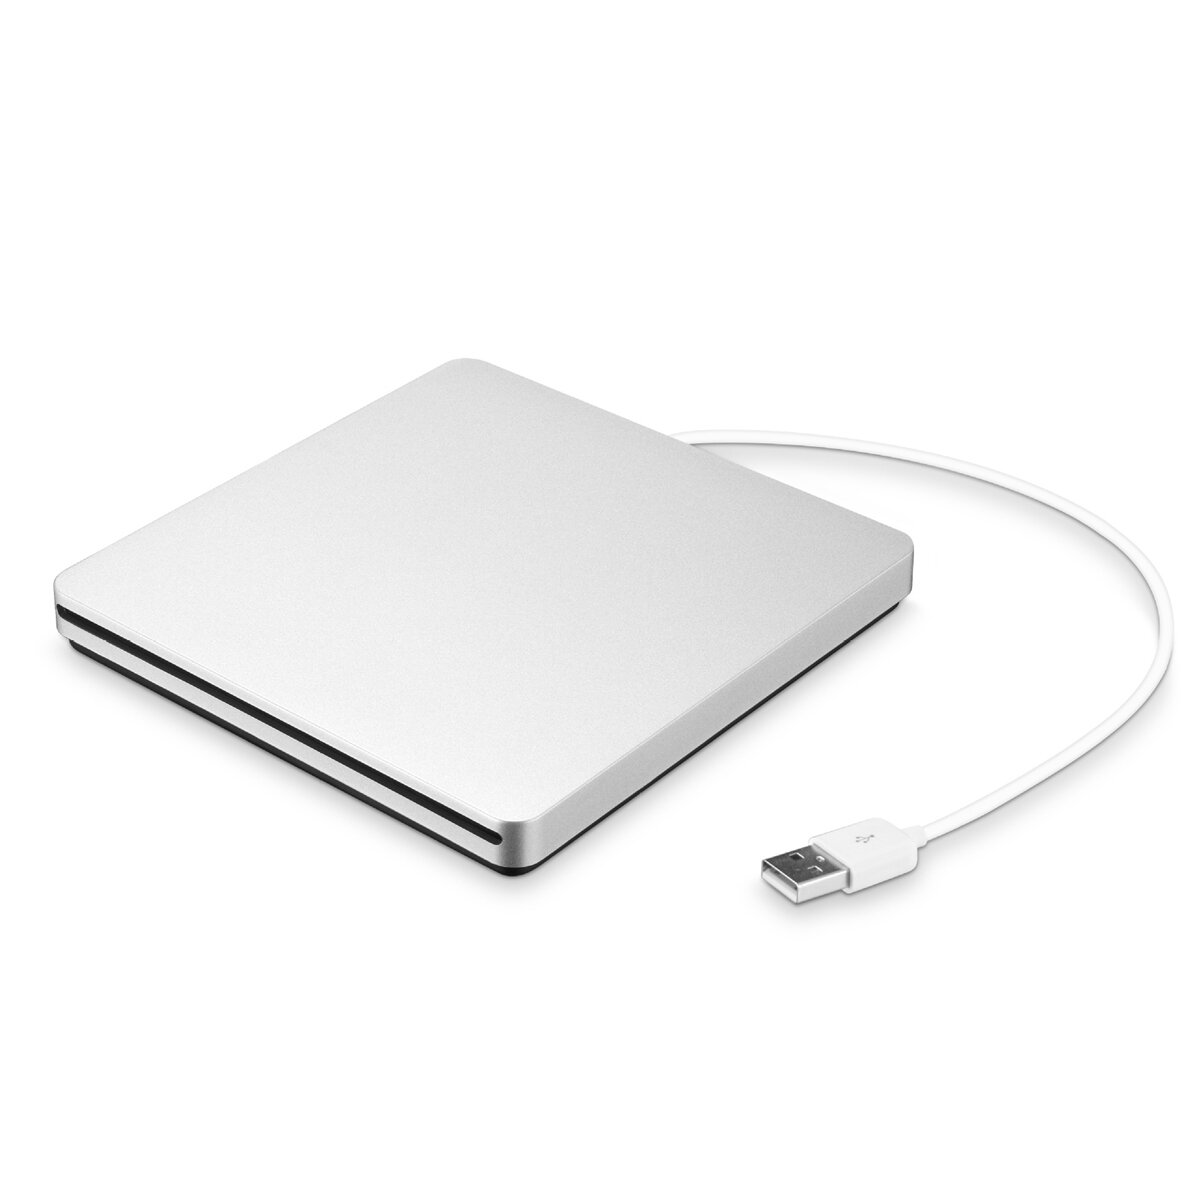 Portable USB 3.0 Silver خارجي DVD-RW Max.24X نقل بيانات عالي السرعة لـ Win XP Win 7 Win 8 Win 10 Mac